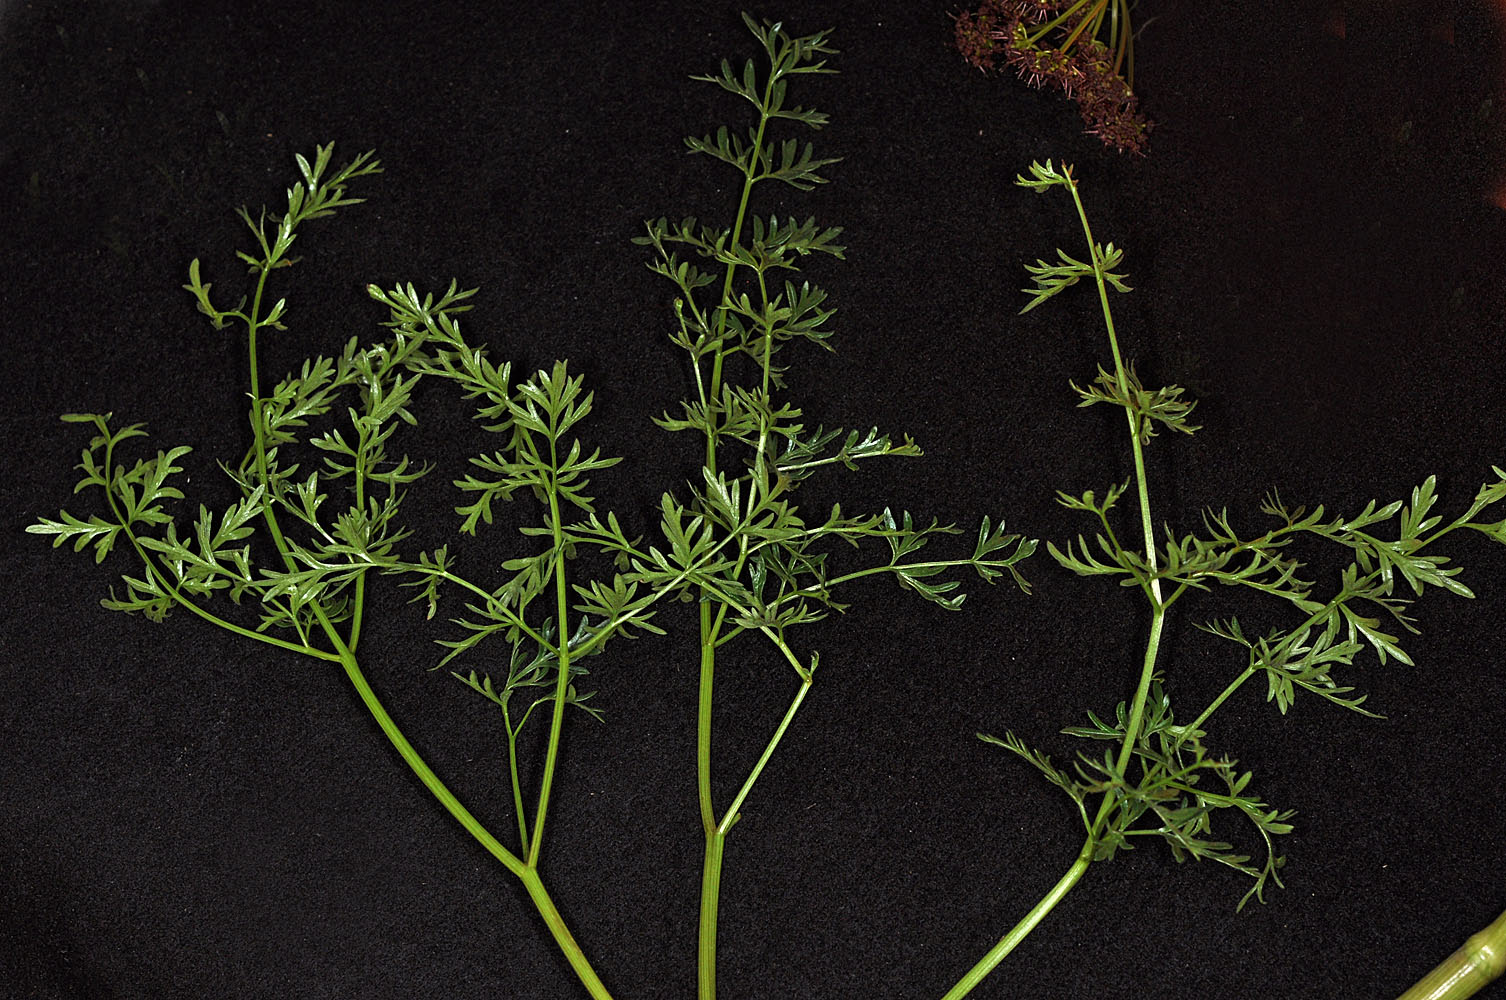 Flora of Eastern Washington Image: Lomatium dissectum